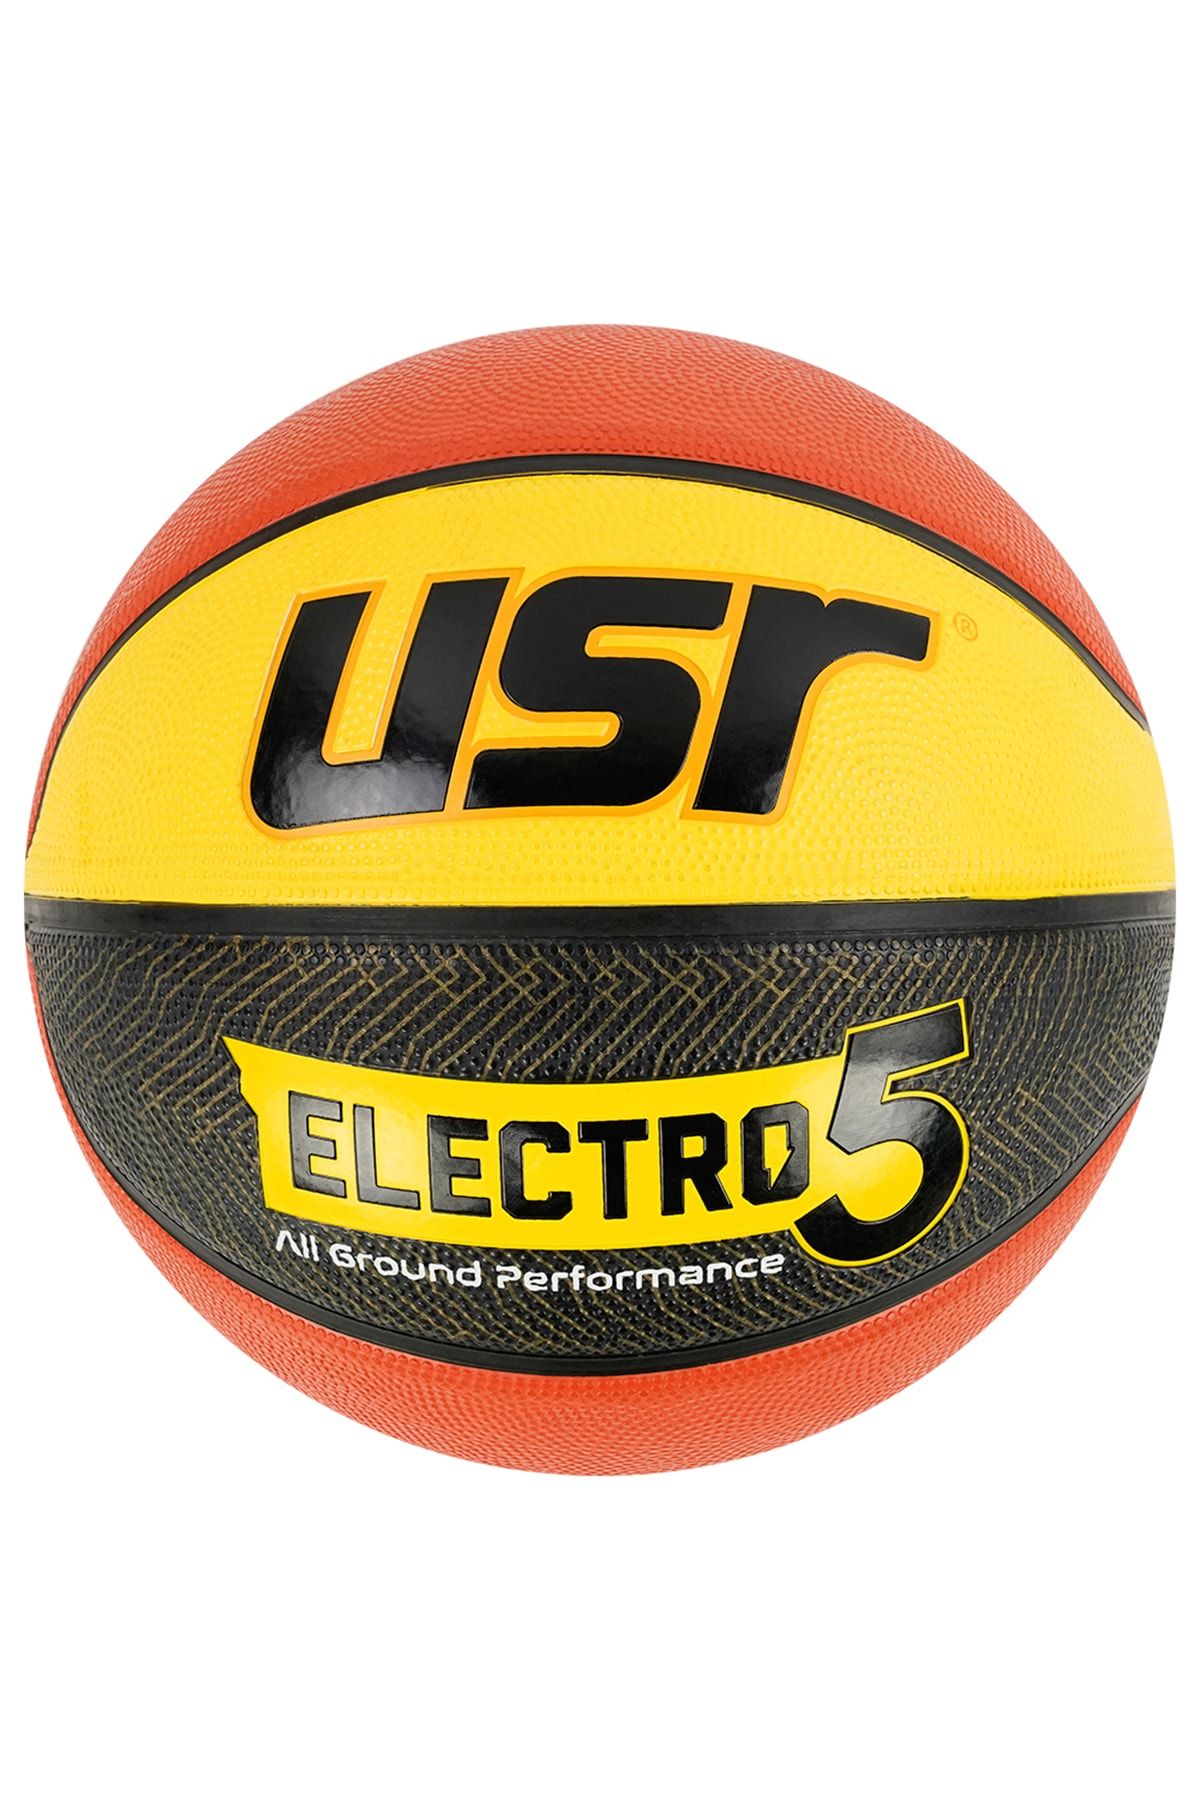 Usr Electro5 Kauçuk 5 No Basketbol Topu